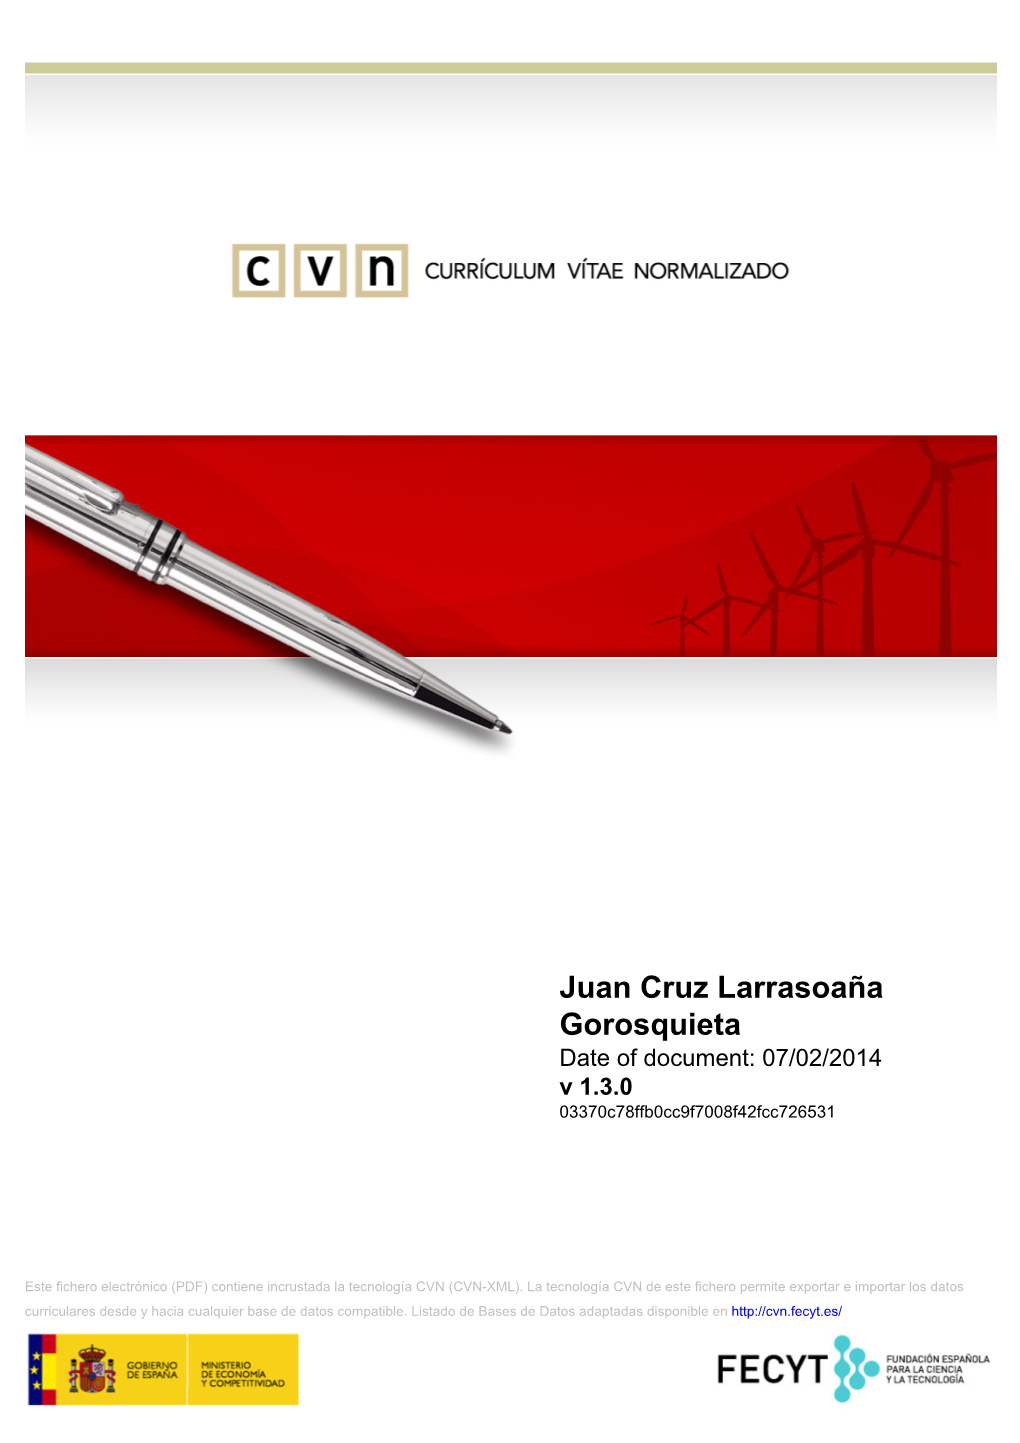 Juan Cruz Larrasoaña Gorosquieta Date of Document: 07/02/2014 V 1.3.0 03370C78ffb0cc9f7008f42fcc726531